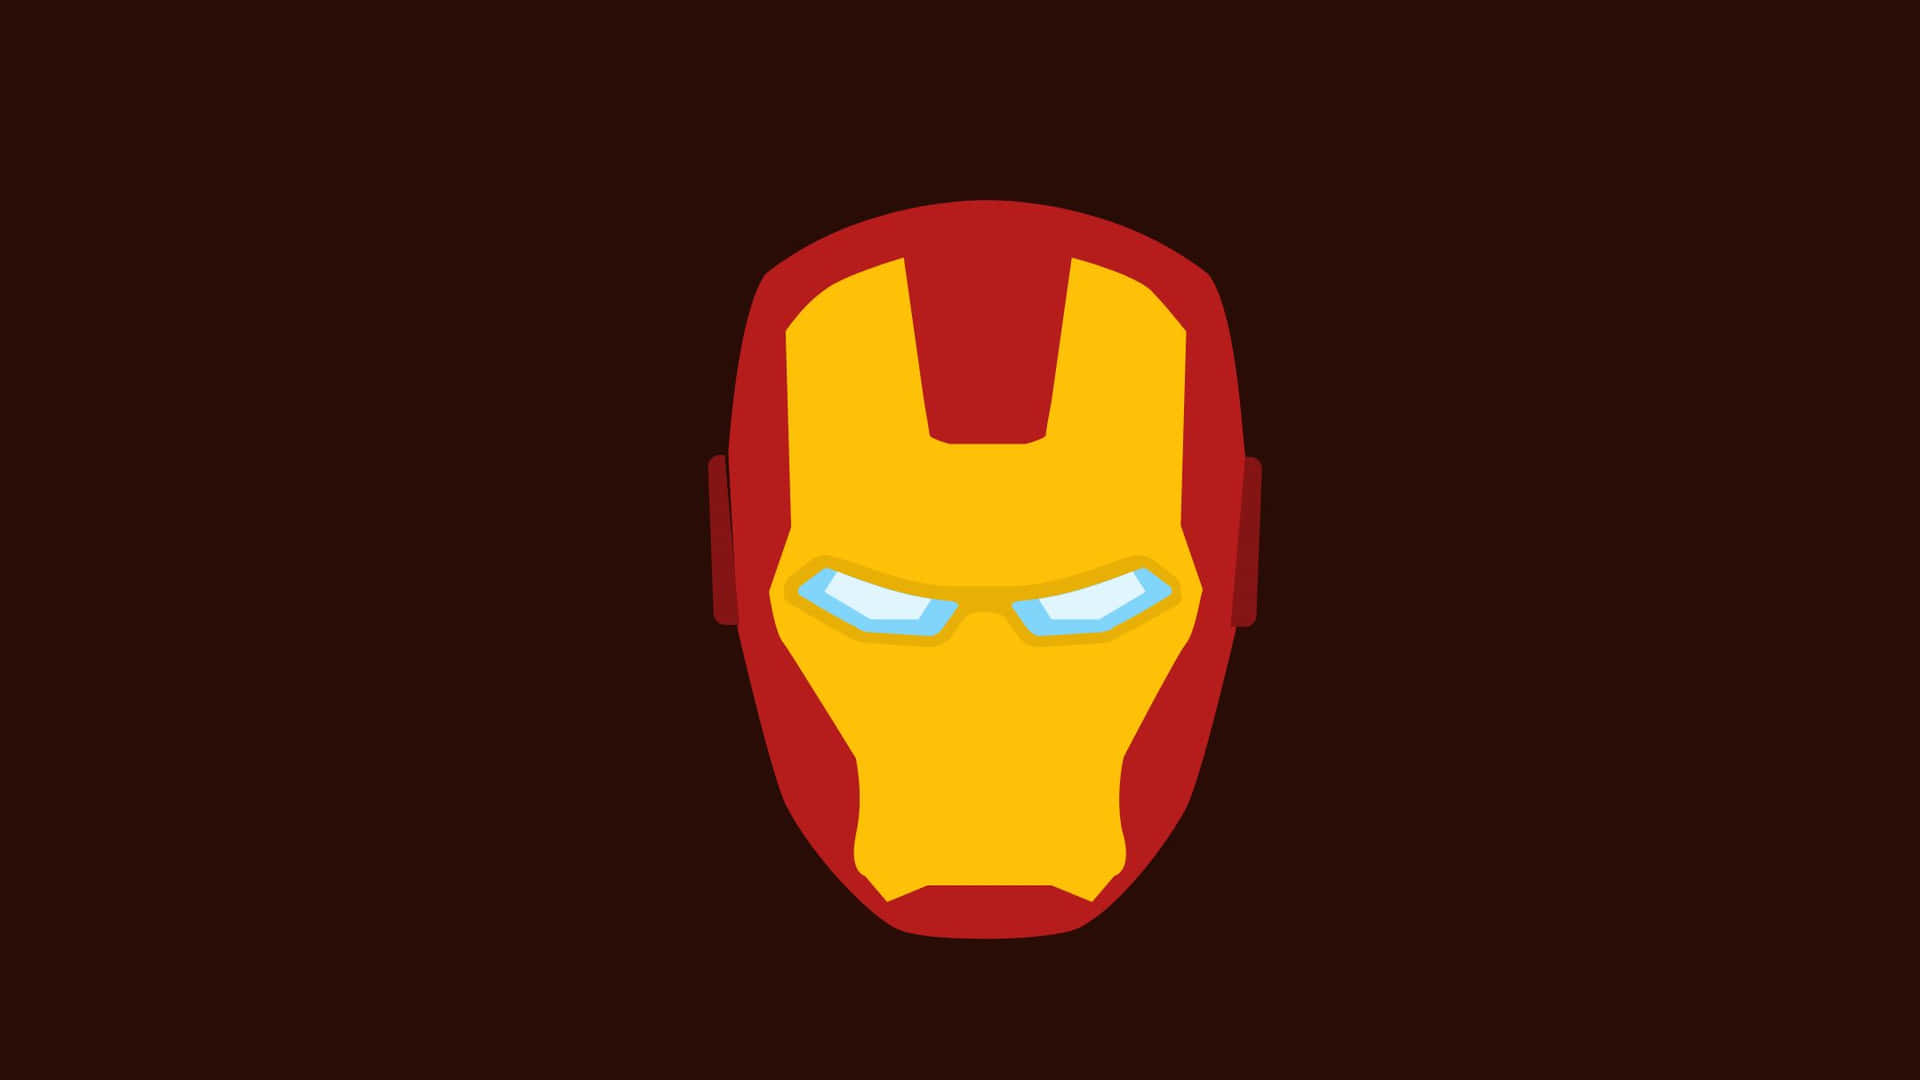 Iron Man Mask On A Dark Background